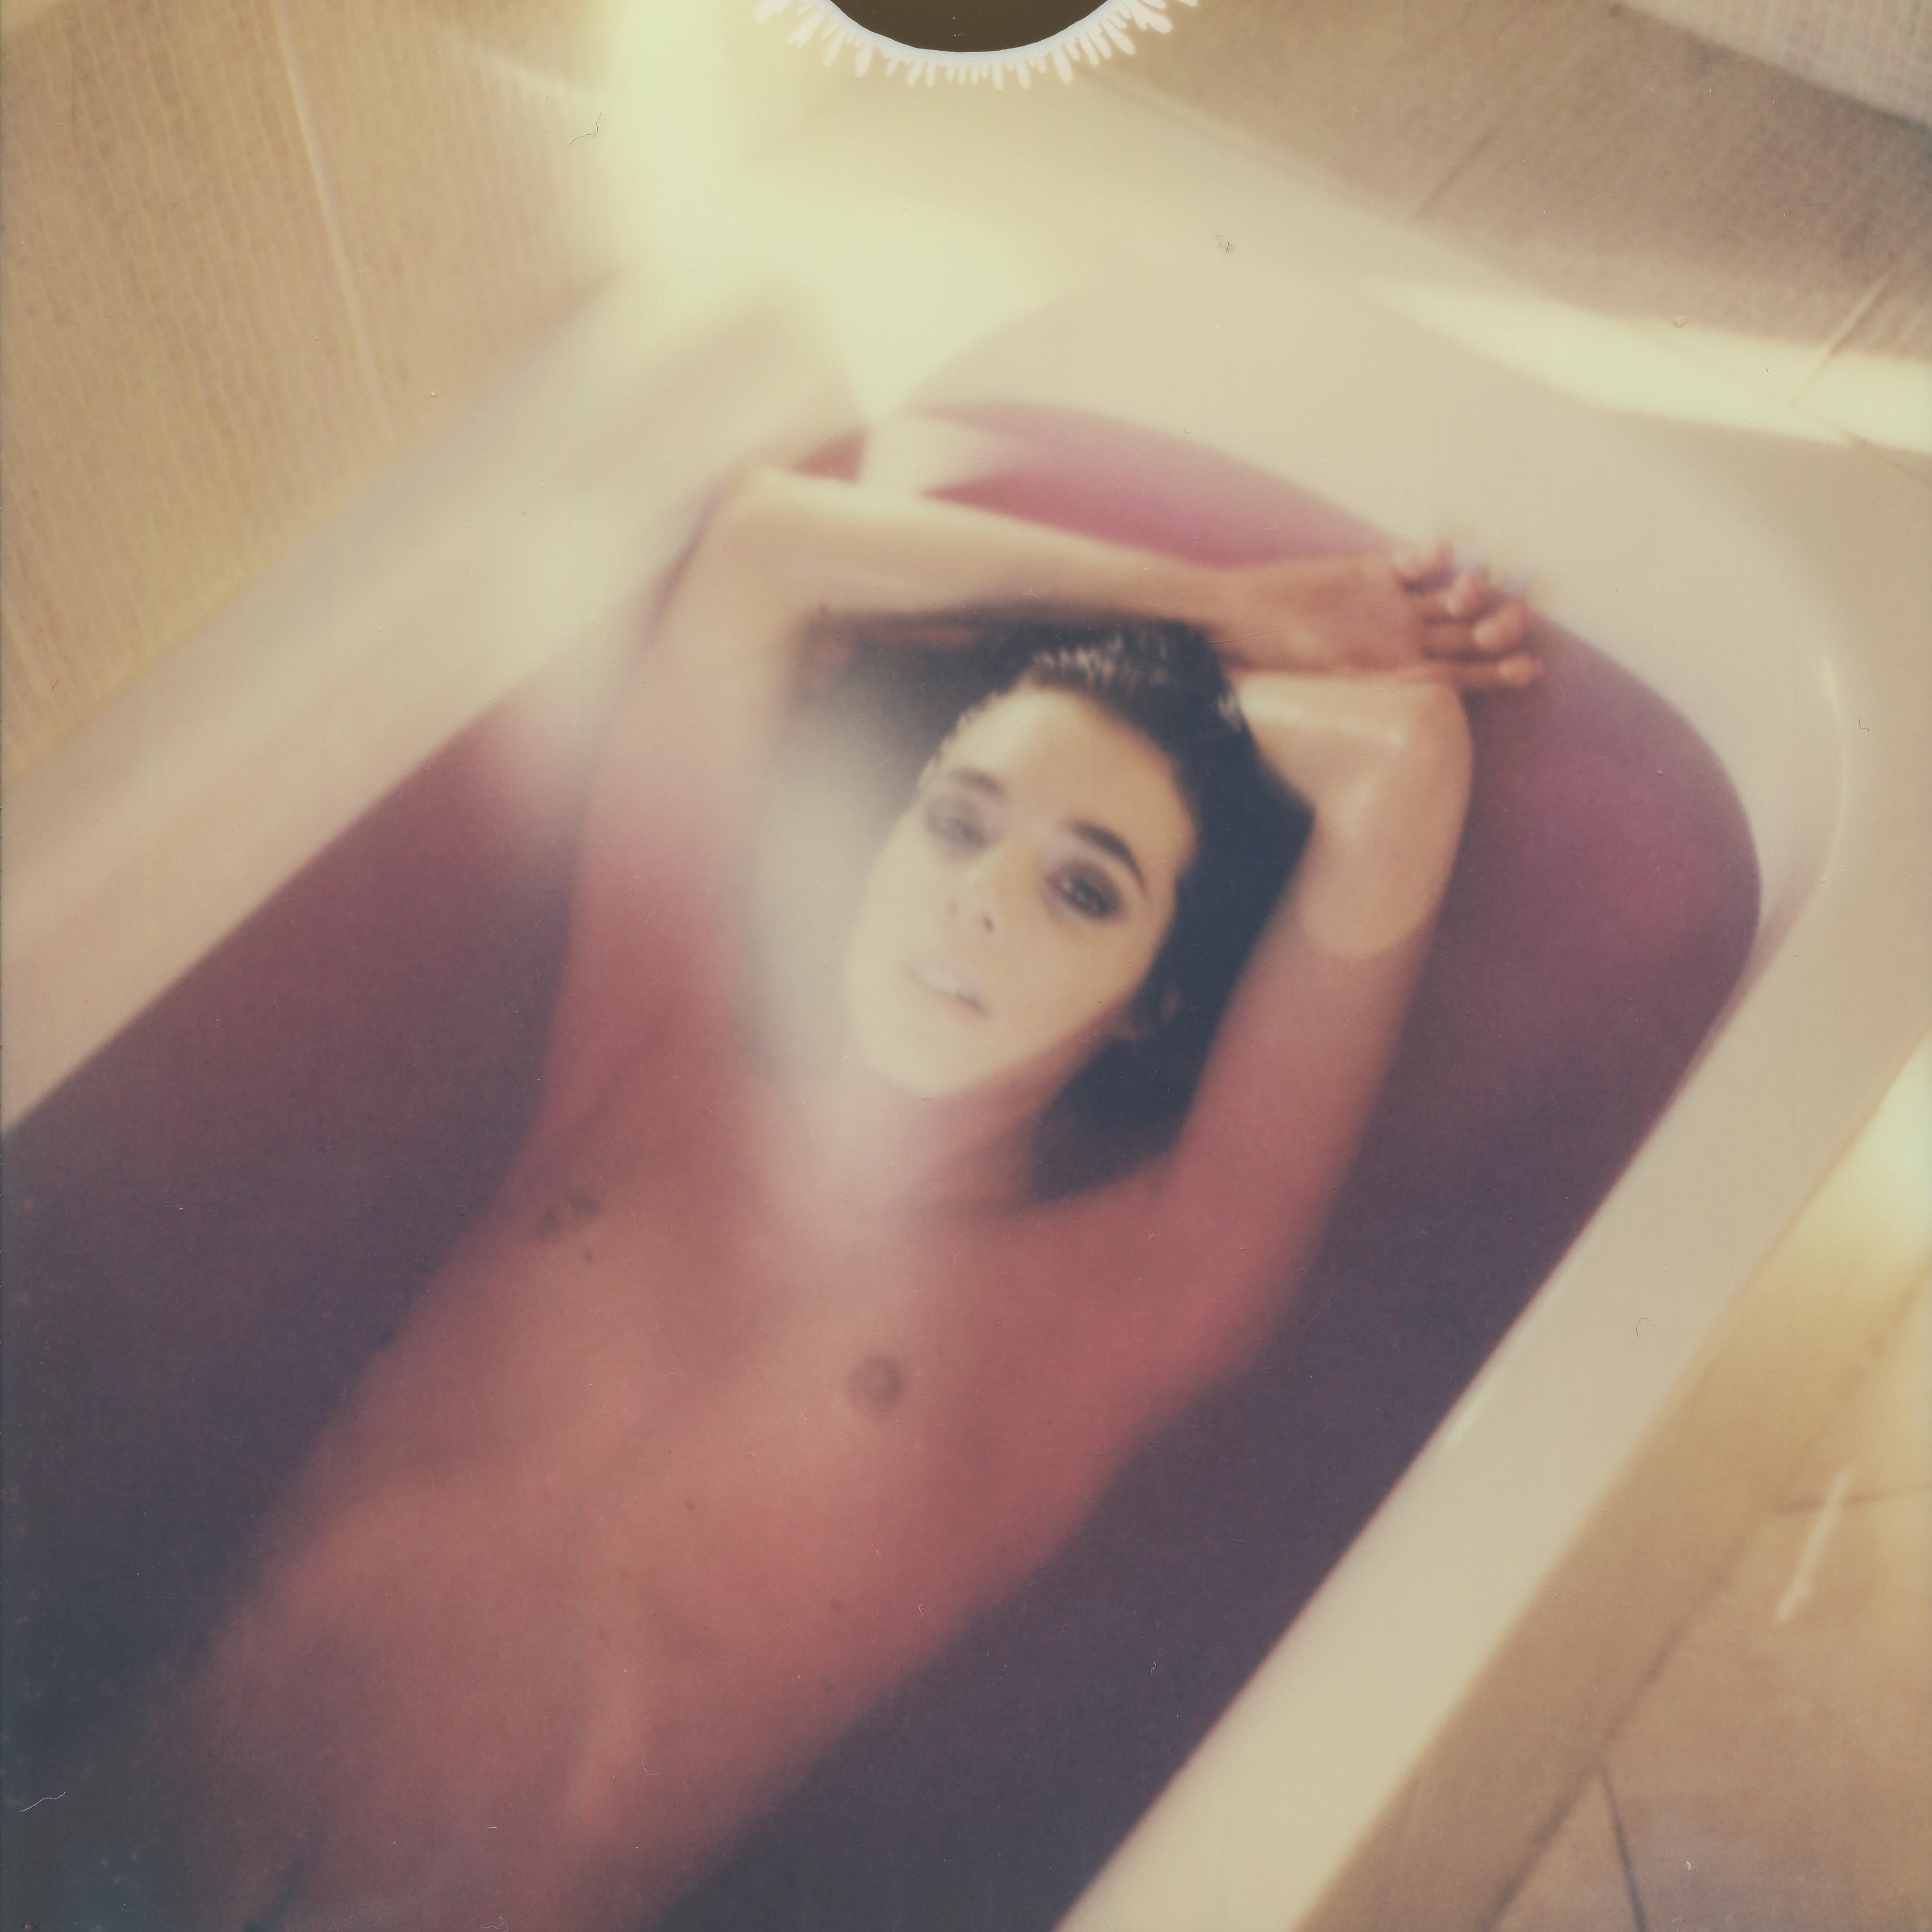 Kirsten Thys van den Audenaerde Color Photograph - Bath time story V - Contemporary, Nude, Women, Polaroid, 21st Century